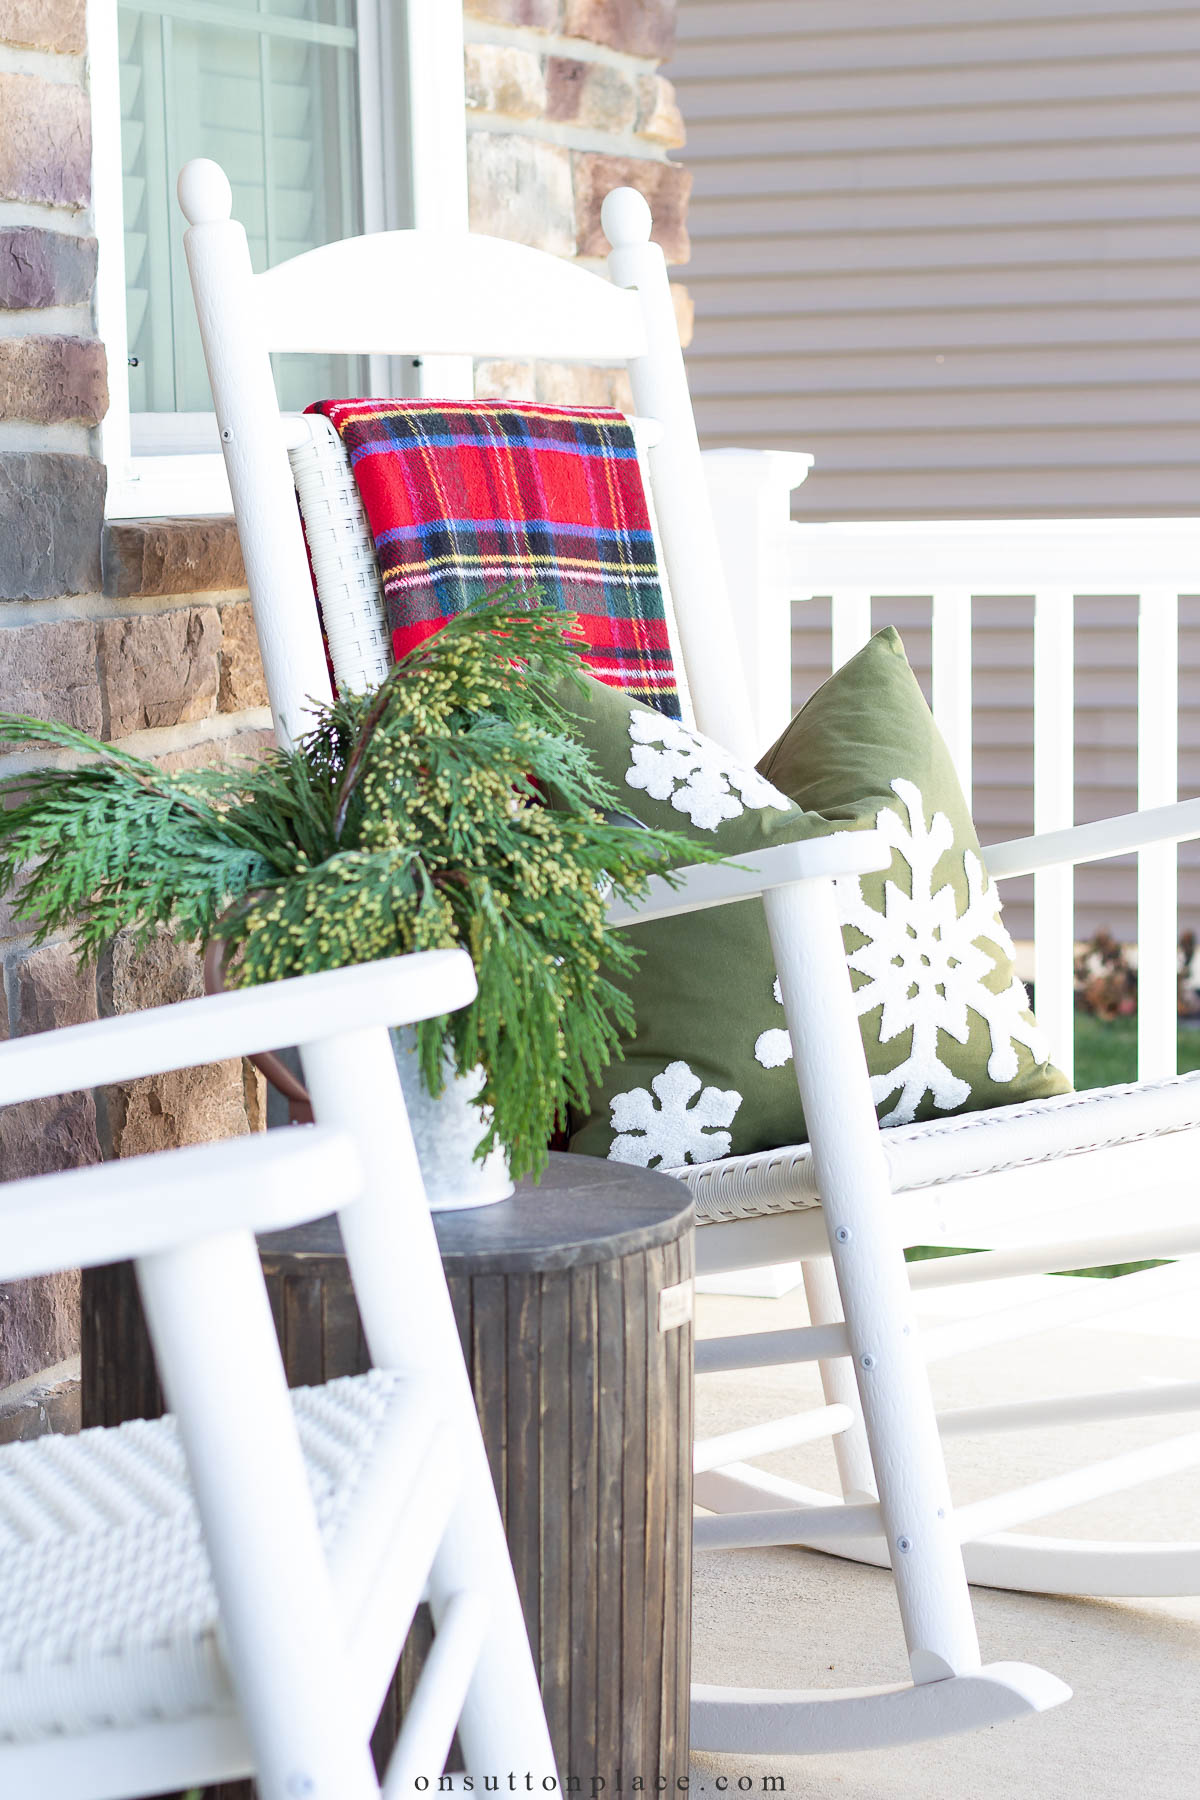 Festive & Frugal Christmas Porch Decor - On Sutton Place